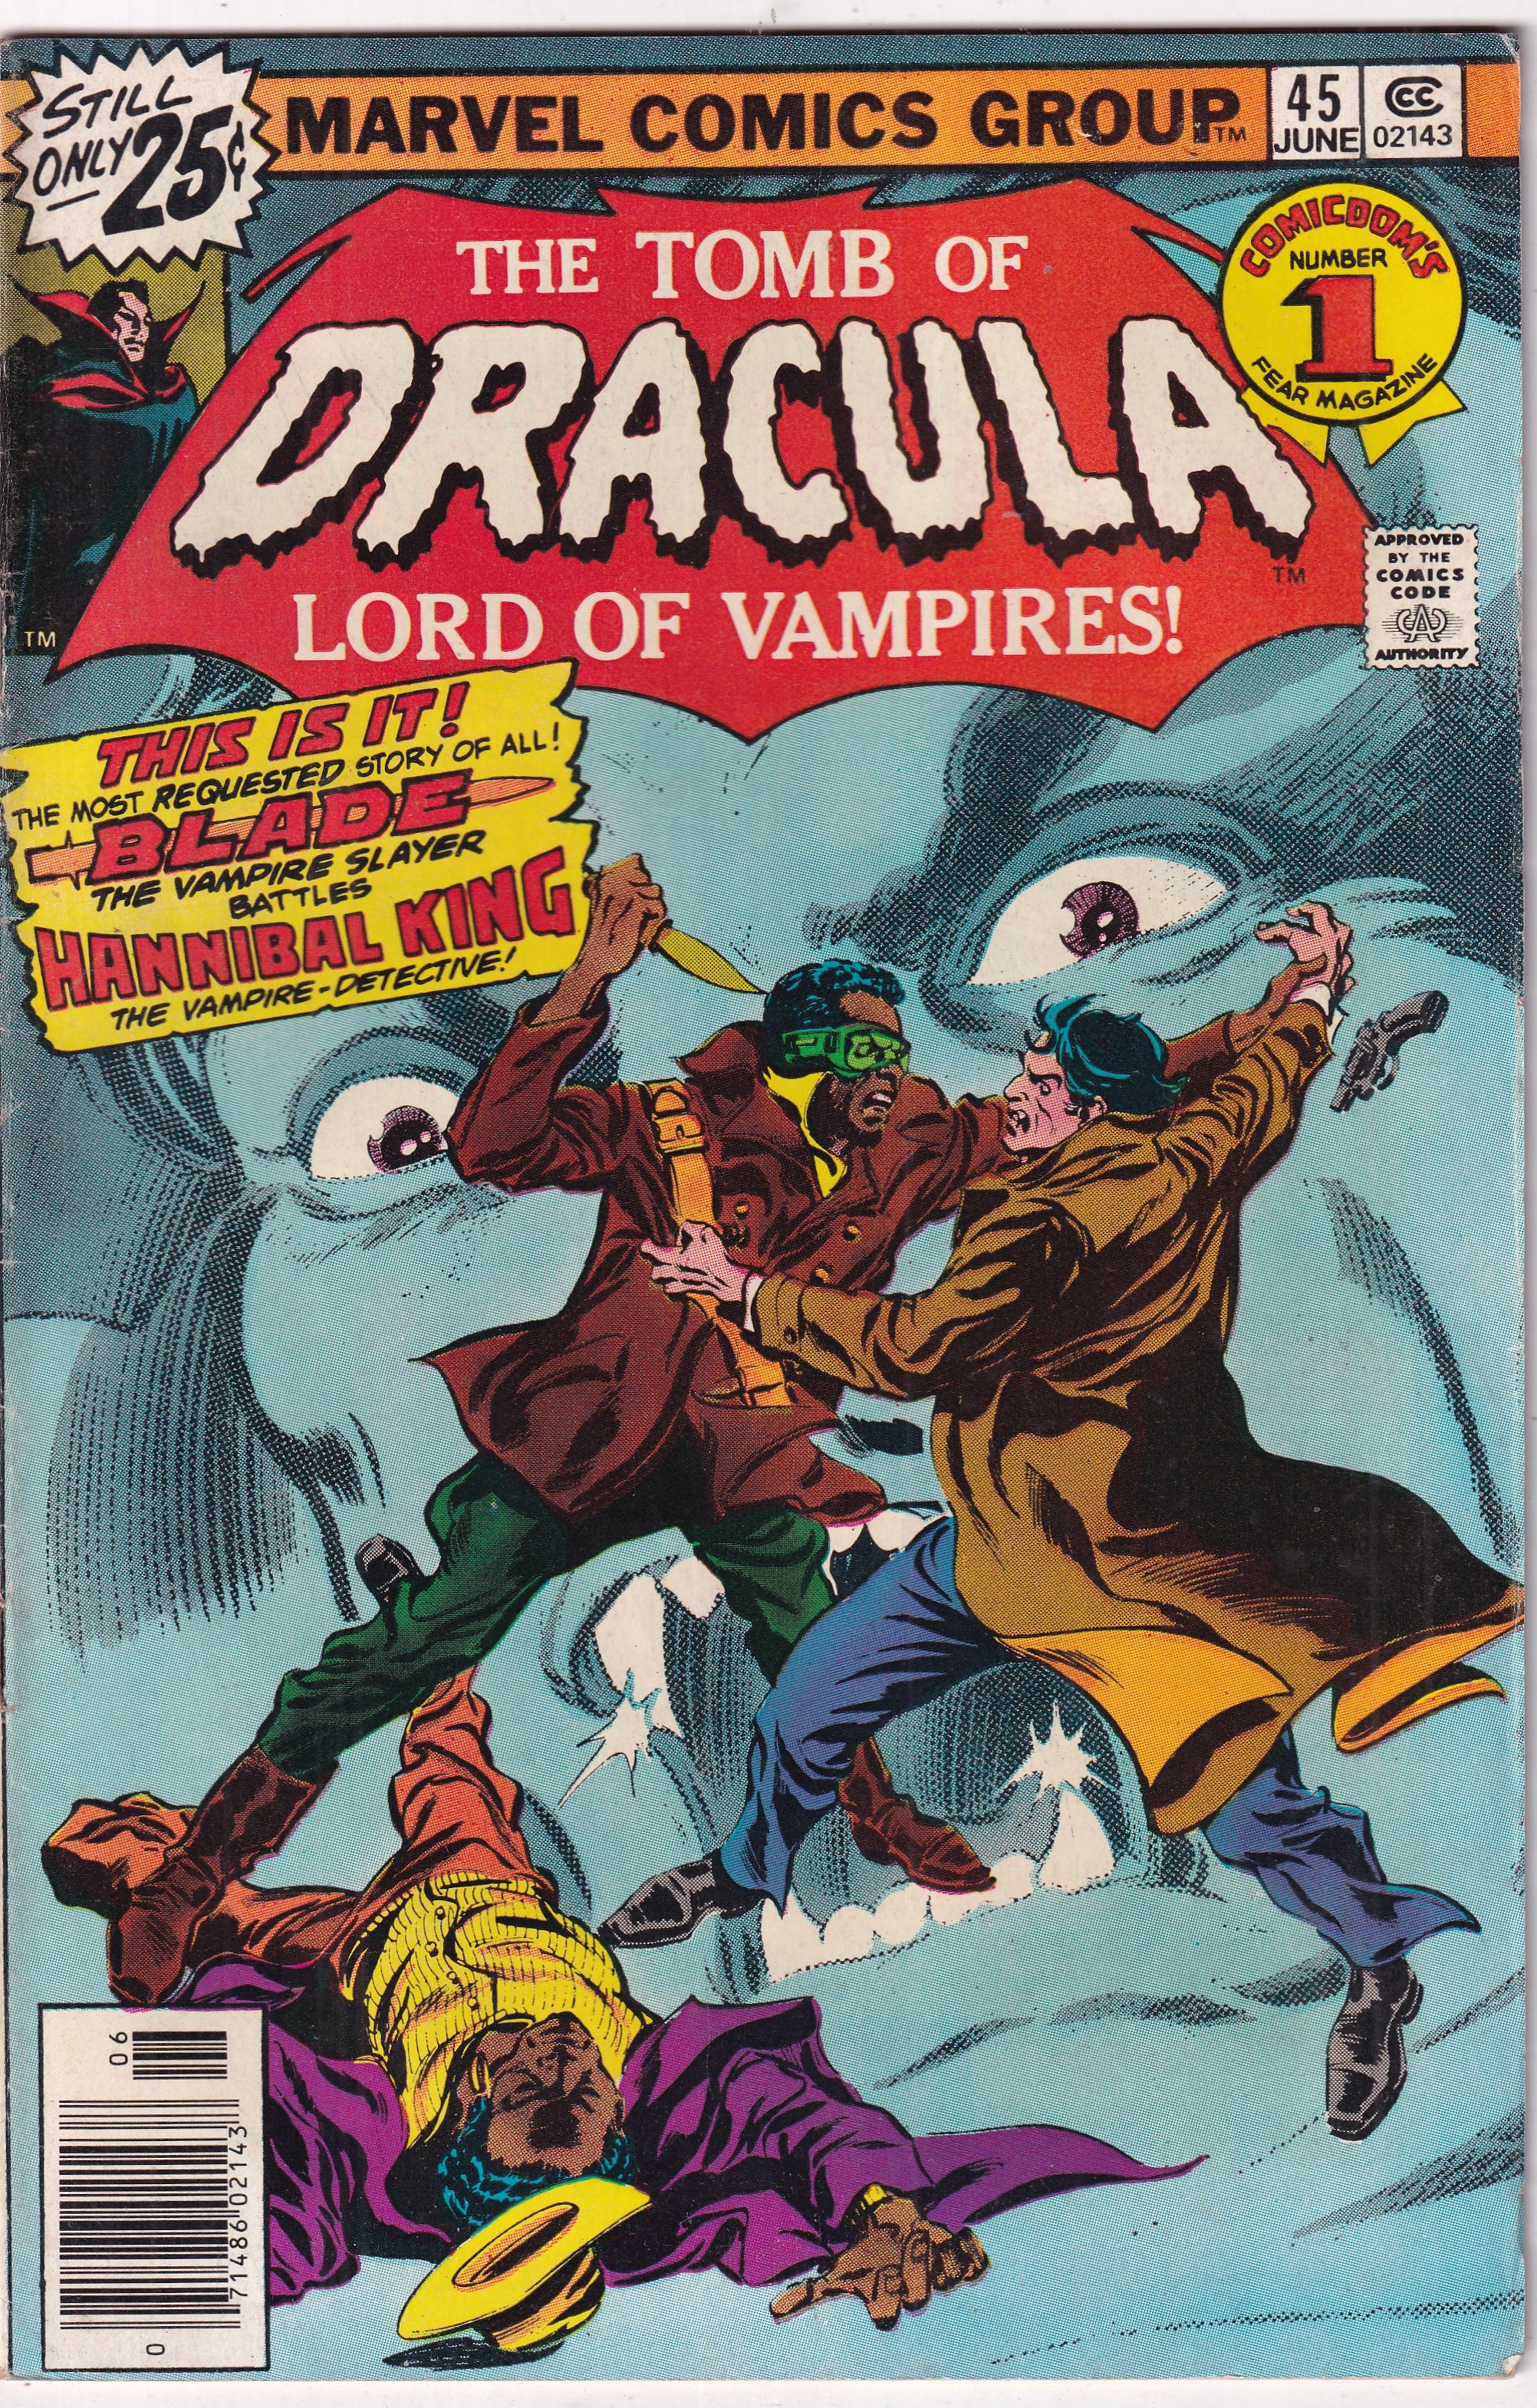 TOMB OF DRACULA #45 - Slab City Comics 